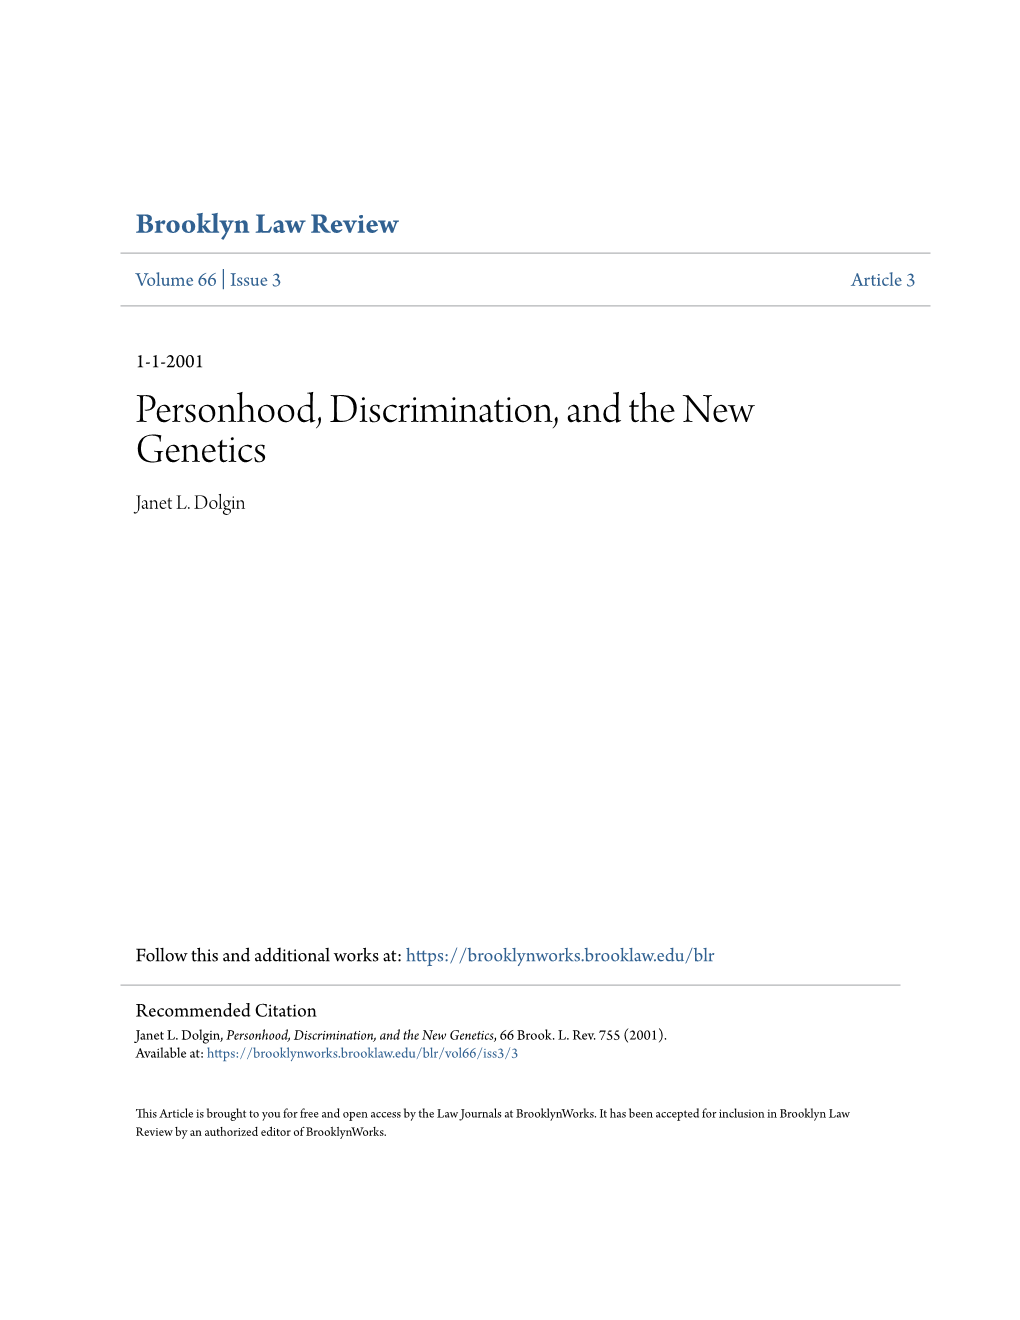 Personhood, Discrimination, and the New Genetics Janet L